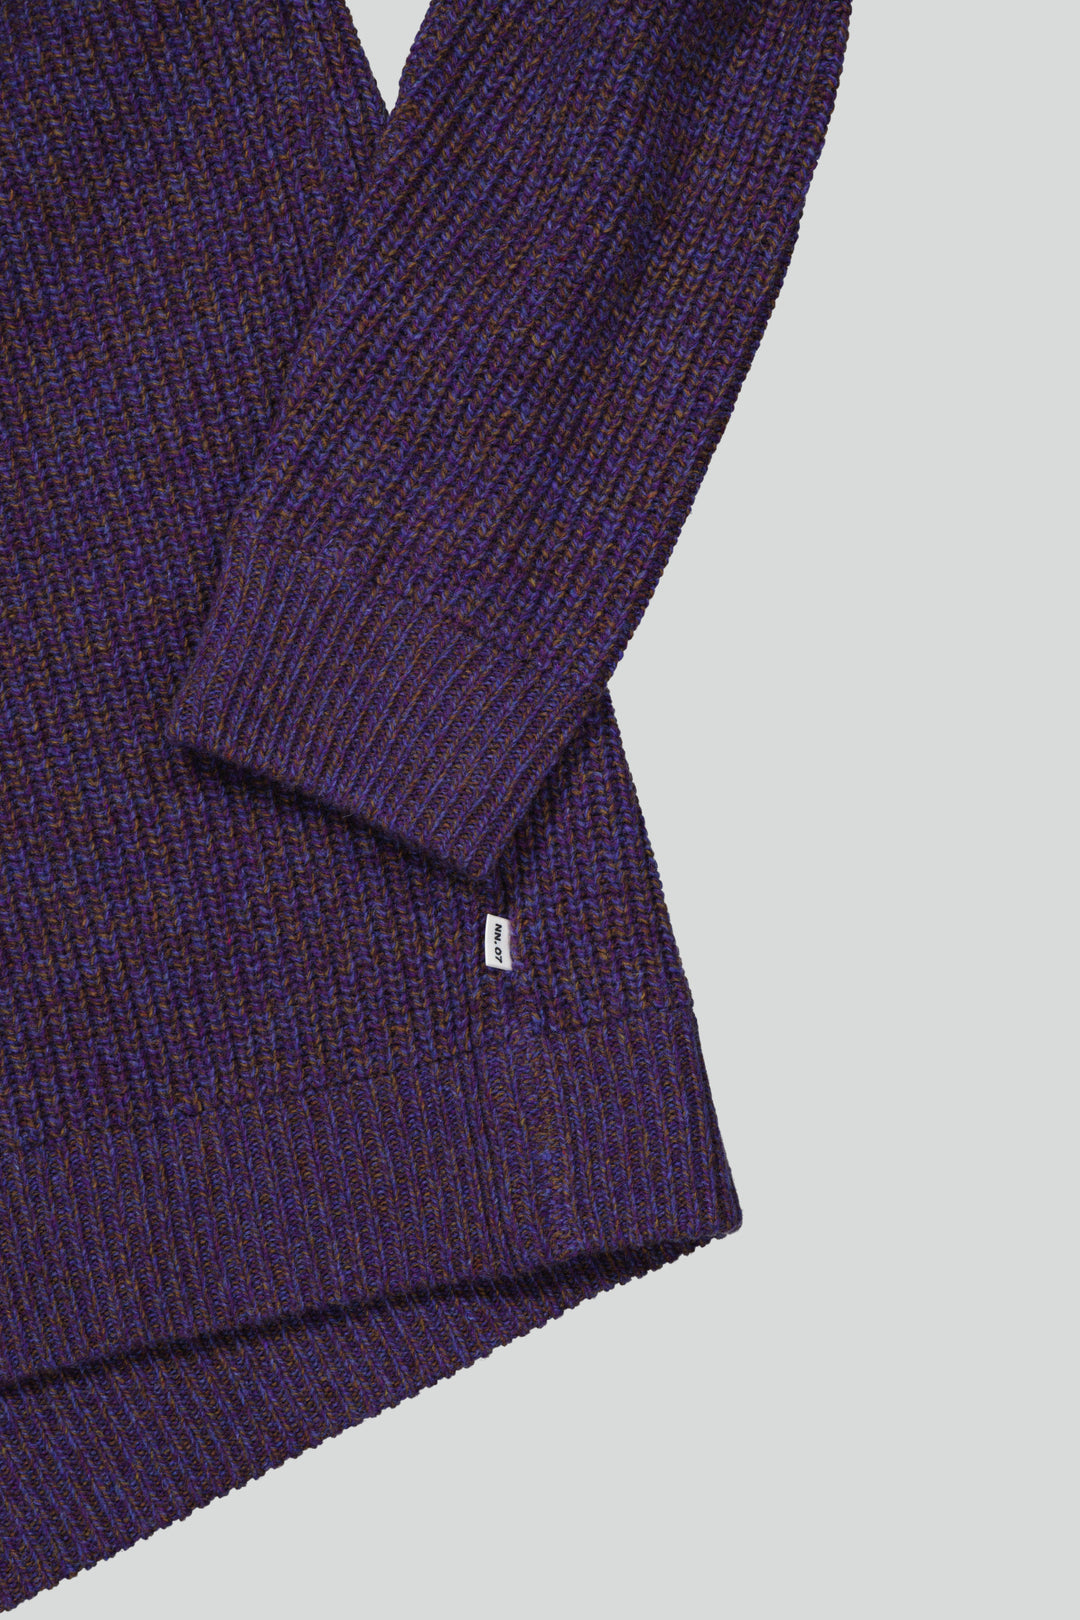 NN07 - Jacobo 6533 Crewneck Sweater in Purple | Buster McGee